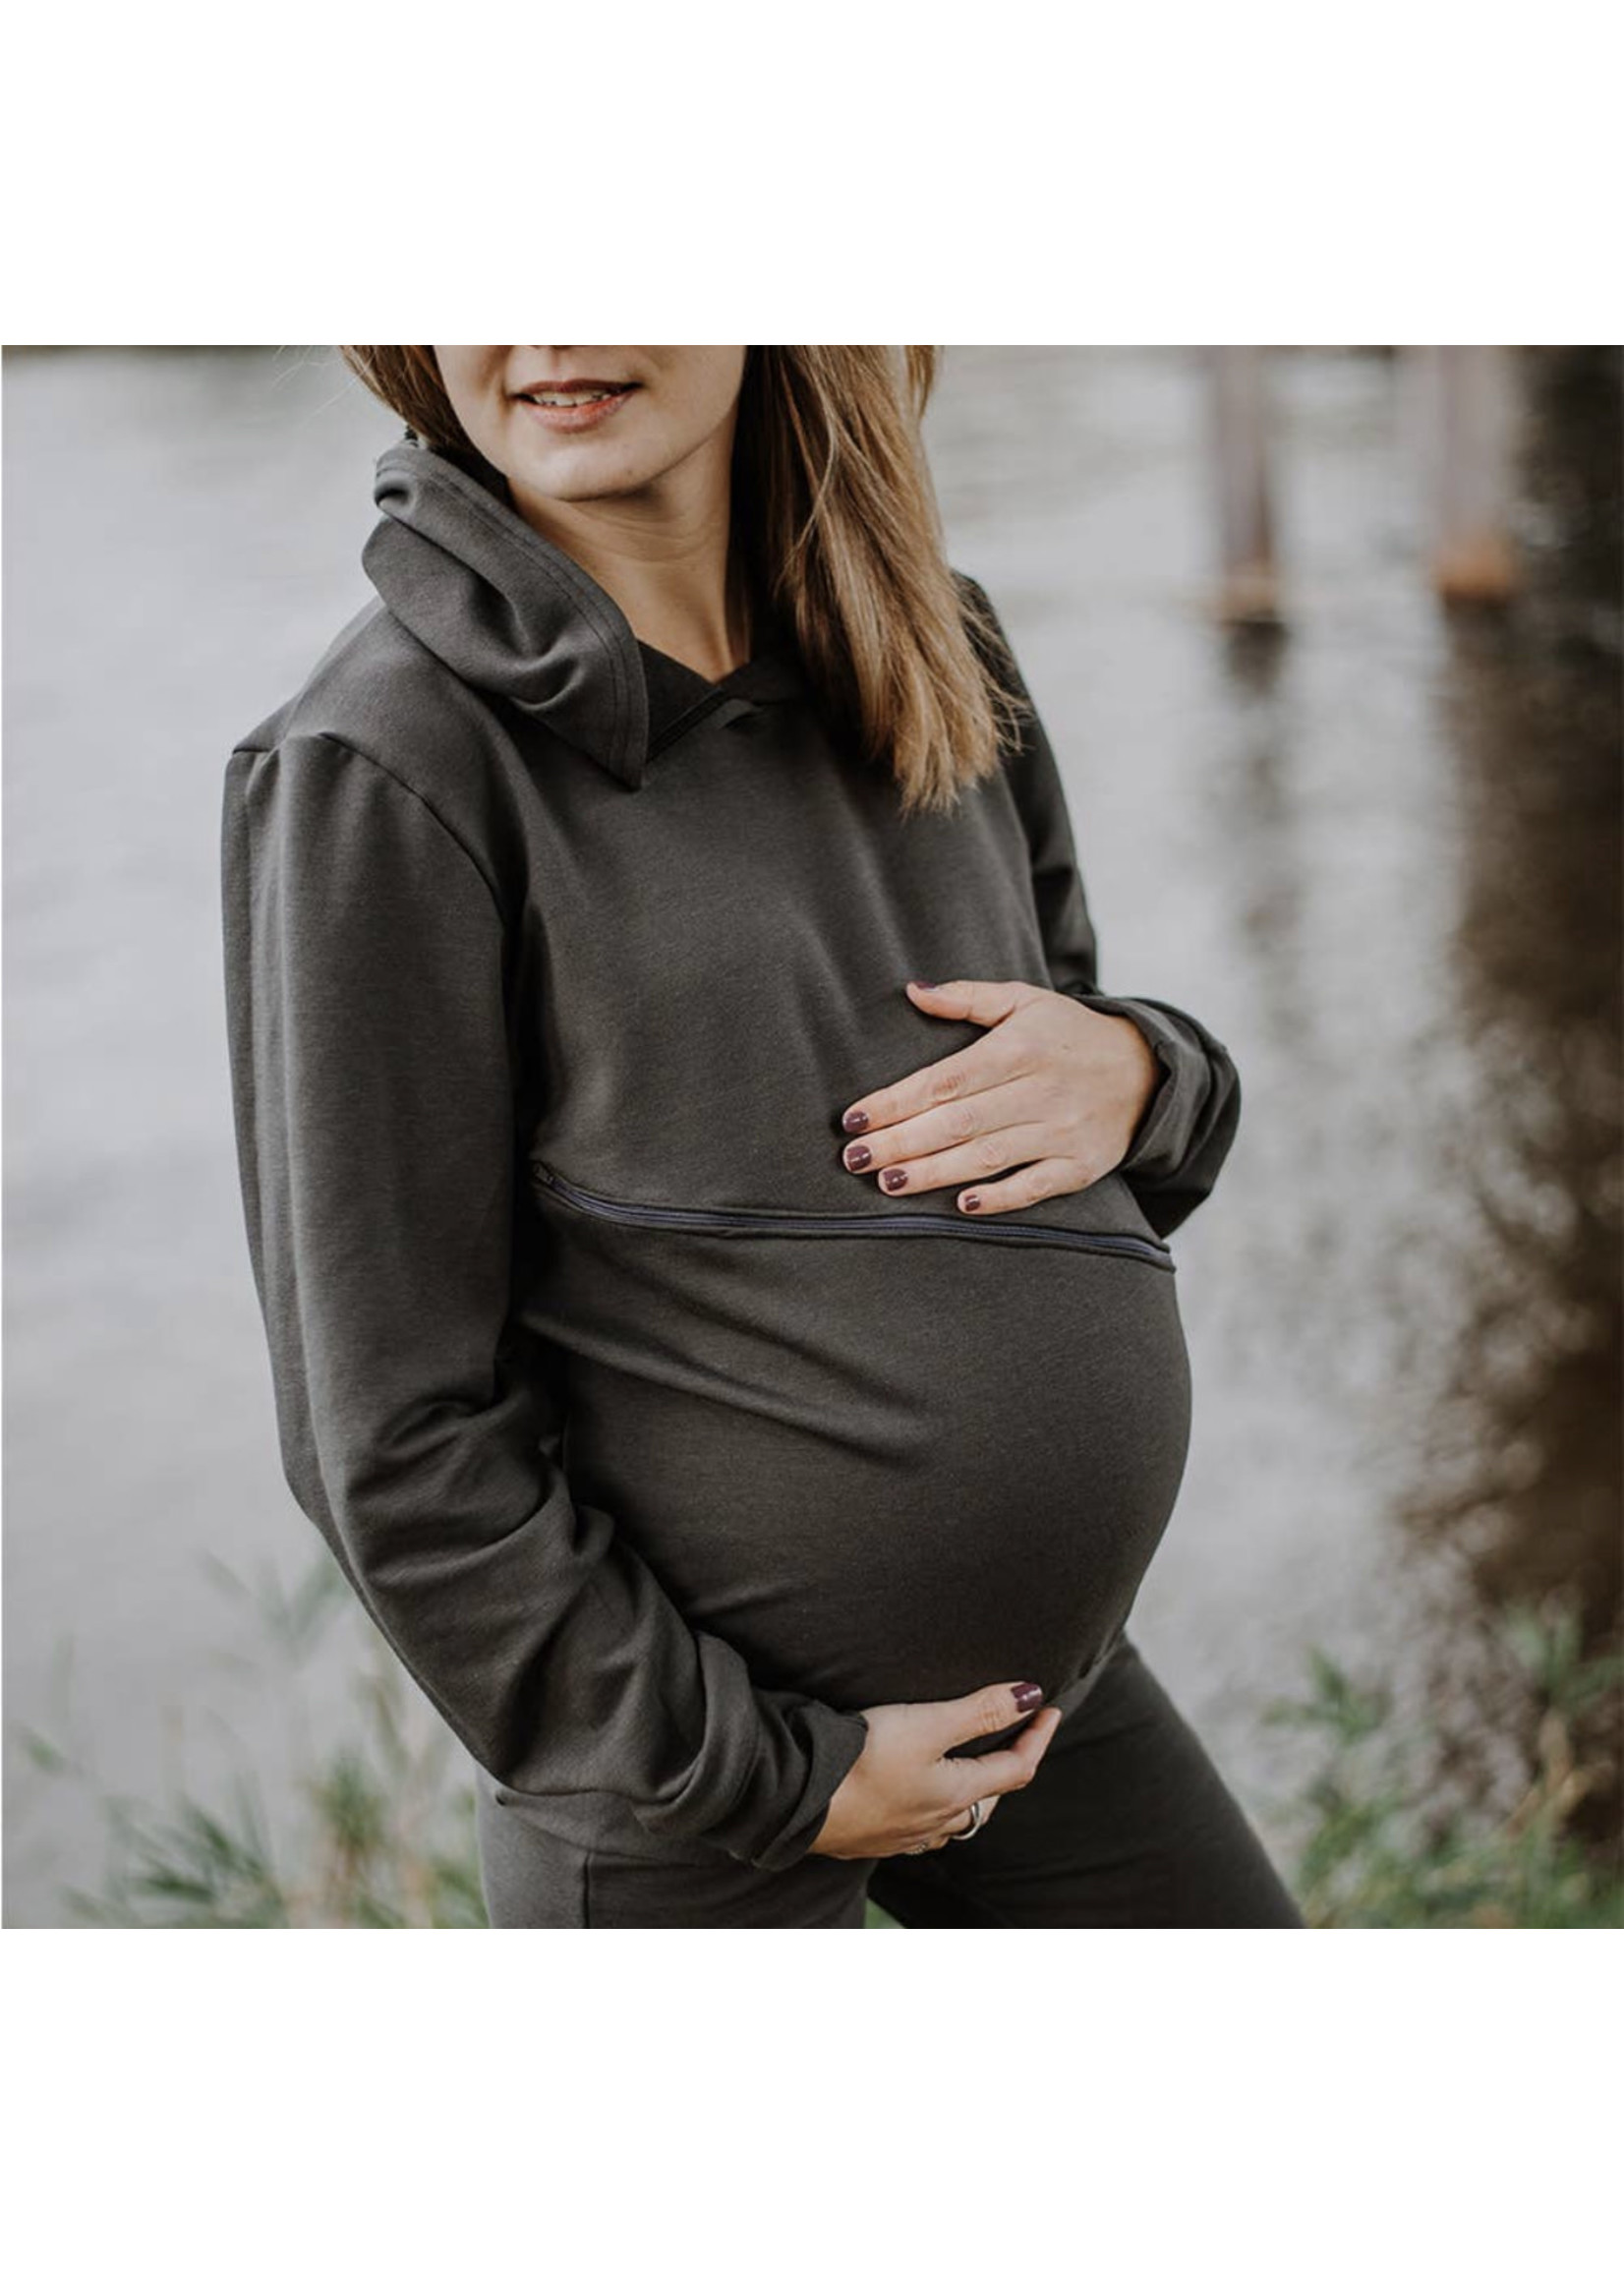 https://cdn.shoplightspeed.com/shops/657508/files/45135830/1652x2313x2/new-genes-maternity-hayden-nursing-hoodie.jpg